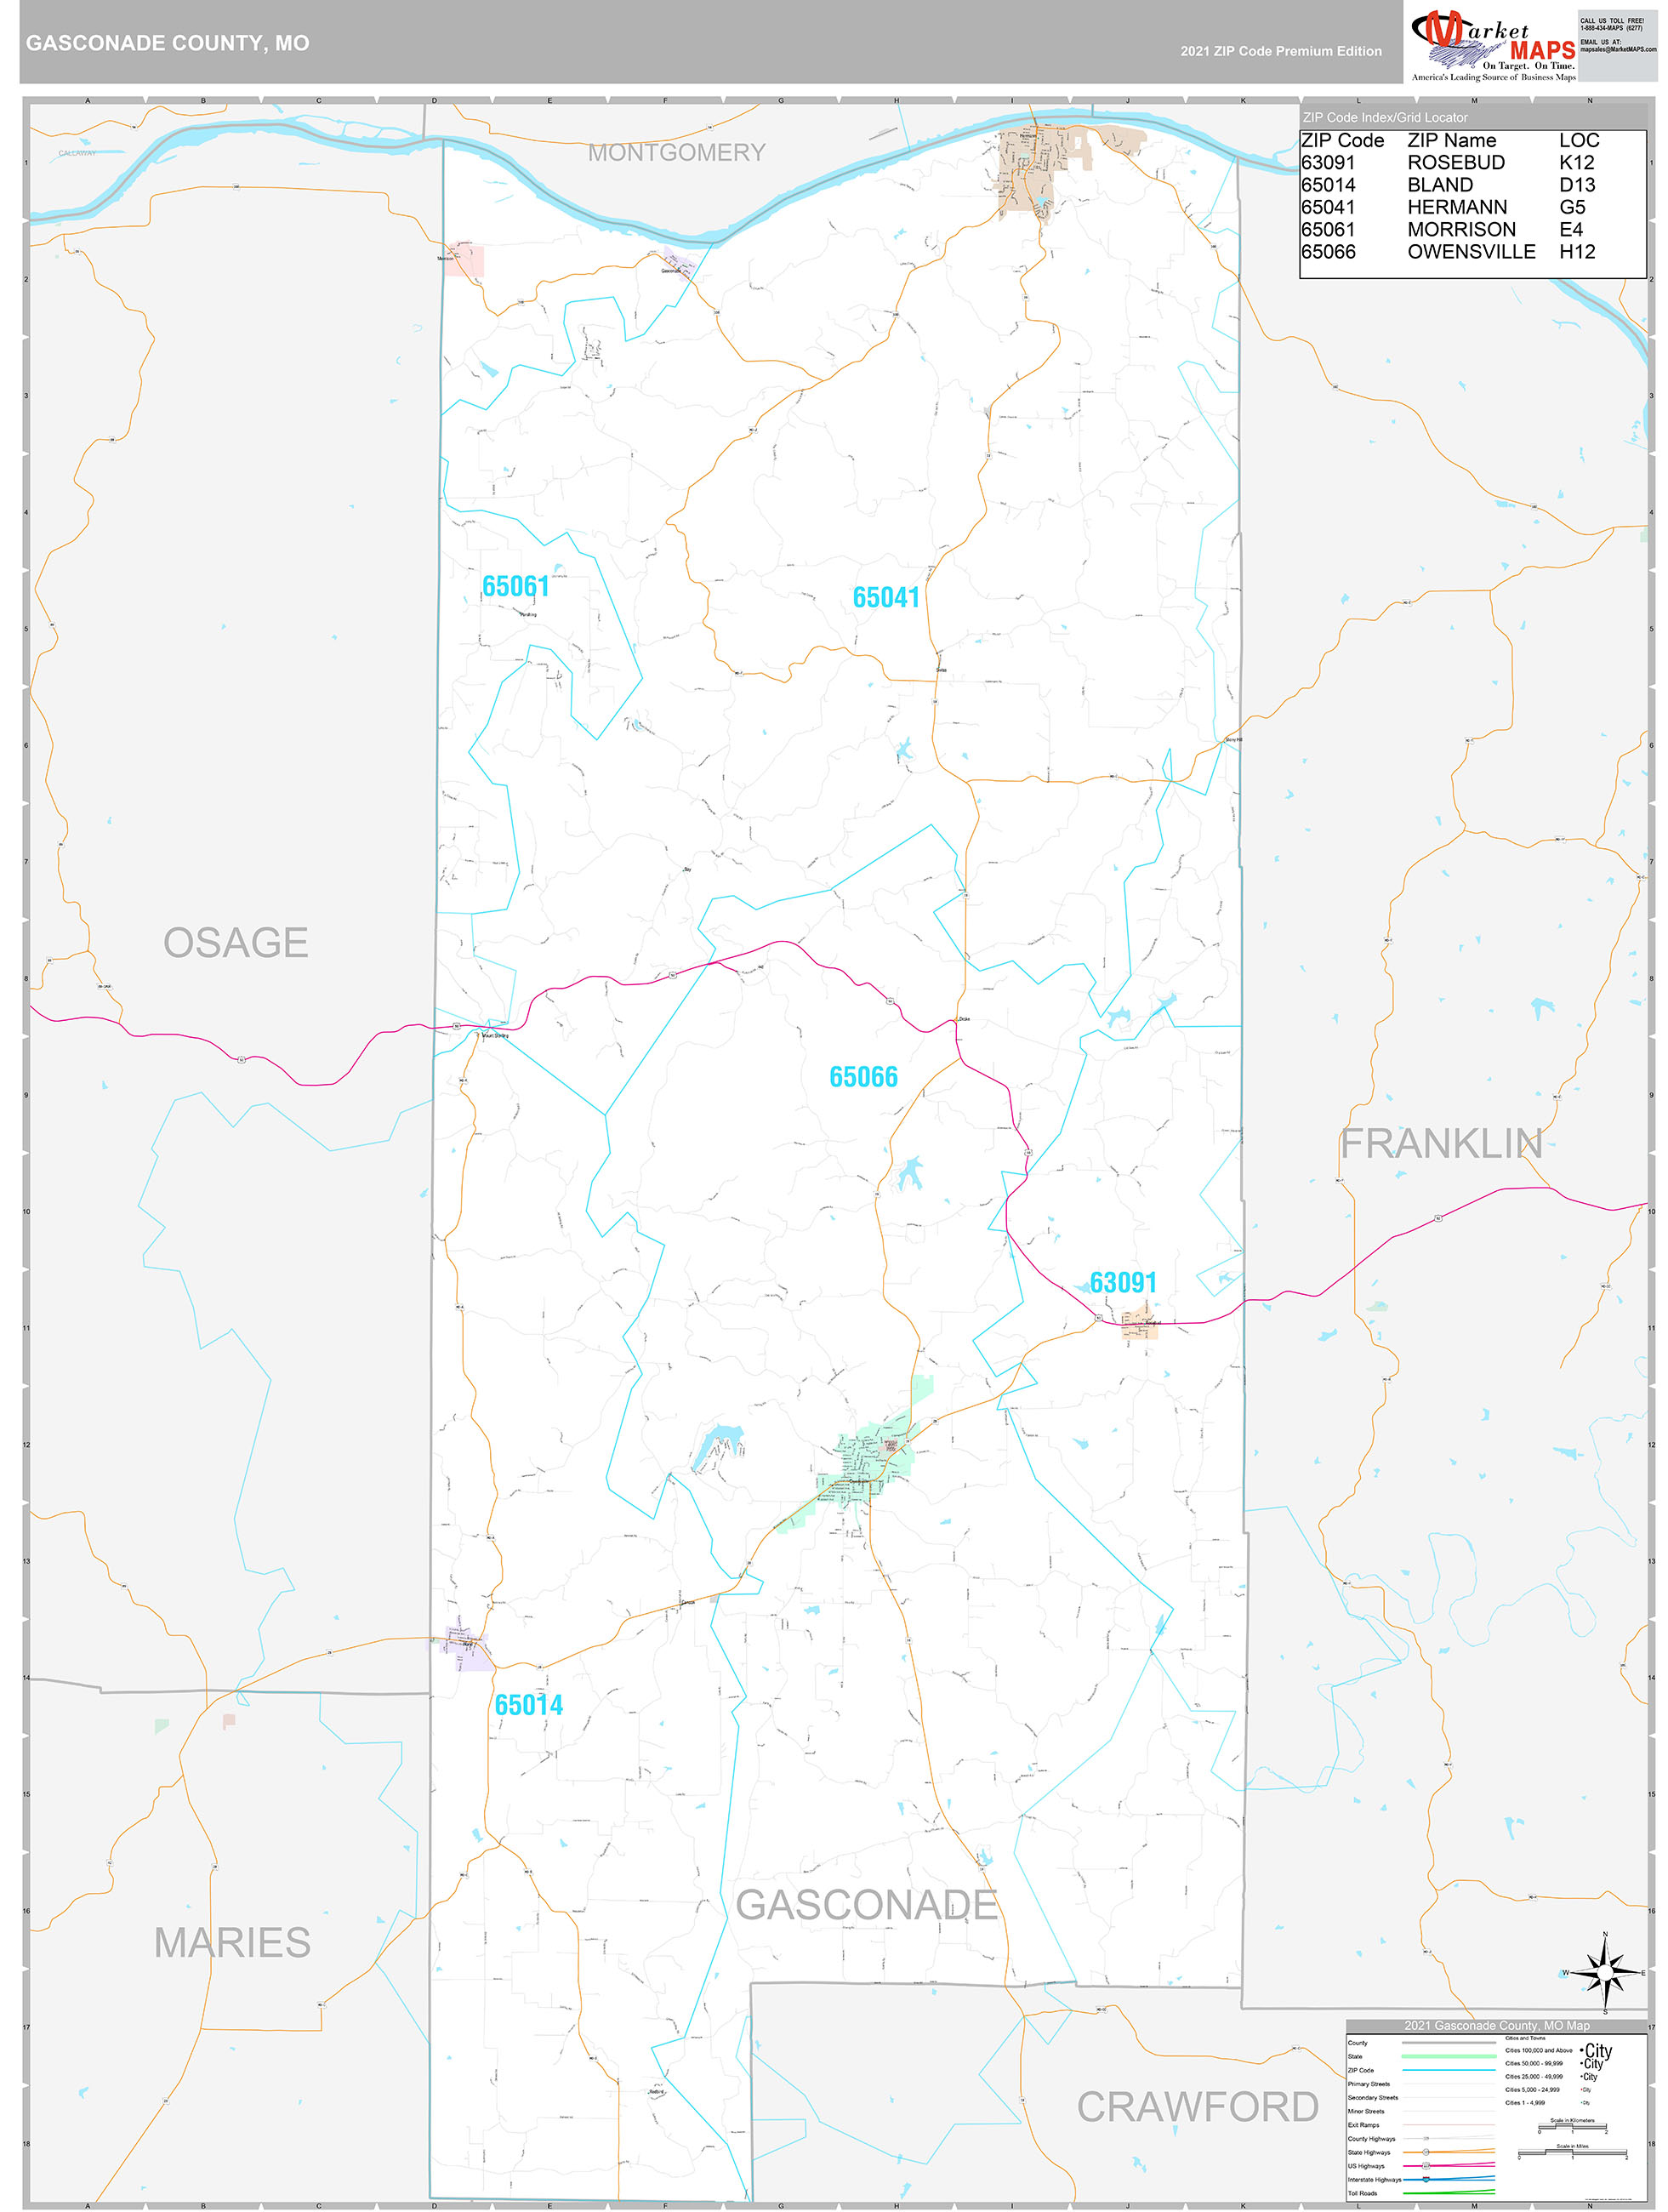 Gasconade County Mo Wall Map Premium Style By Marketmaps 9062